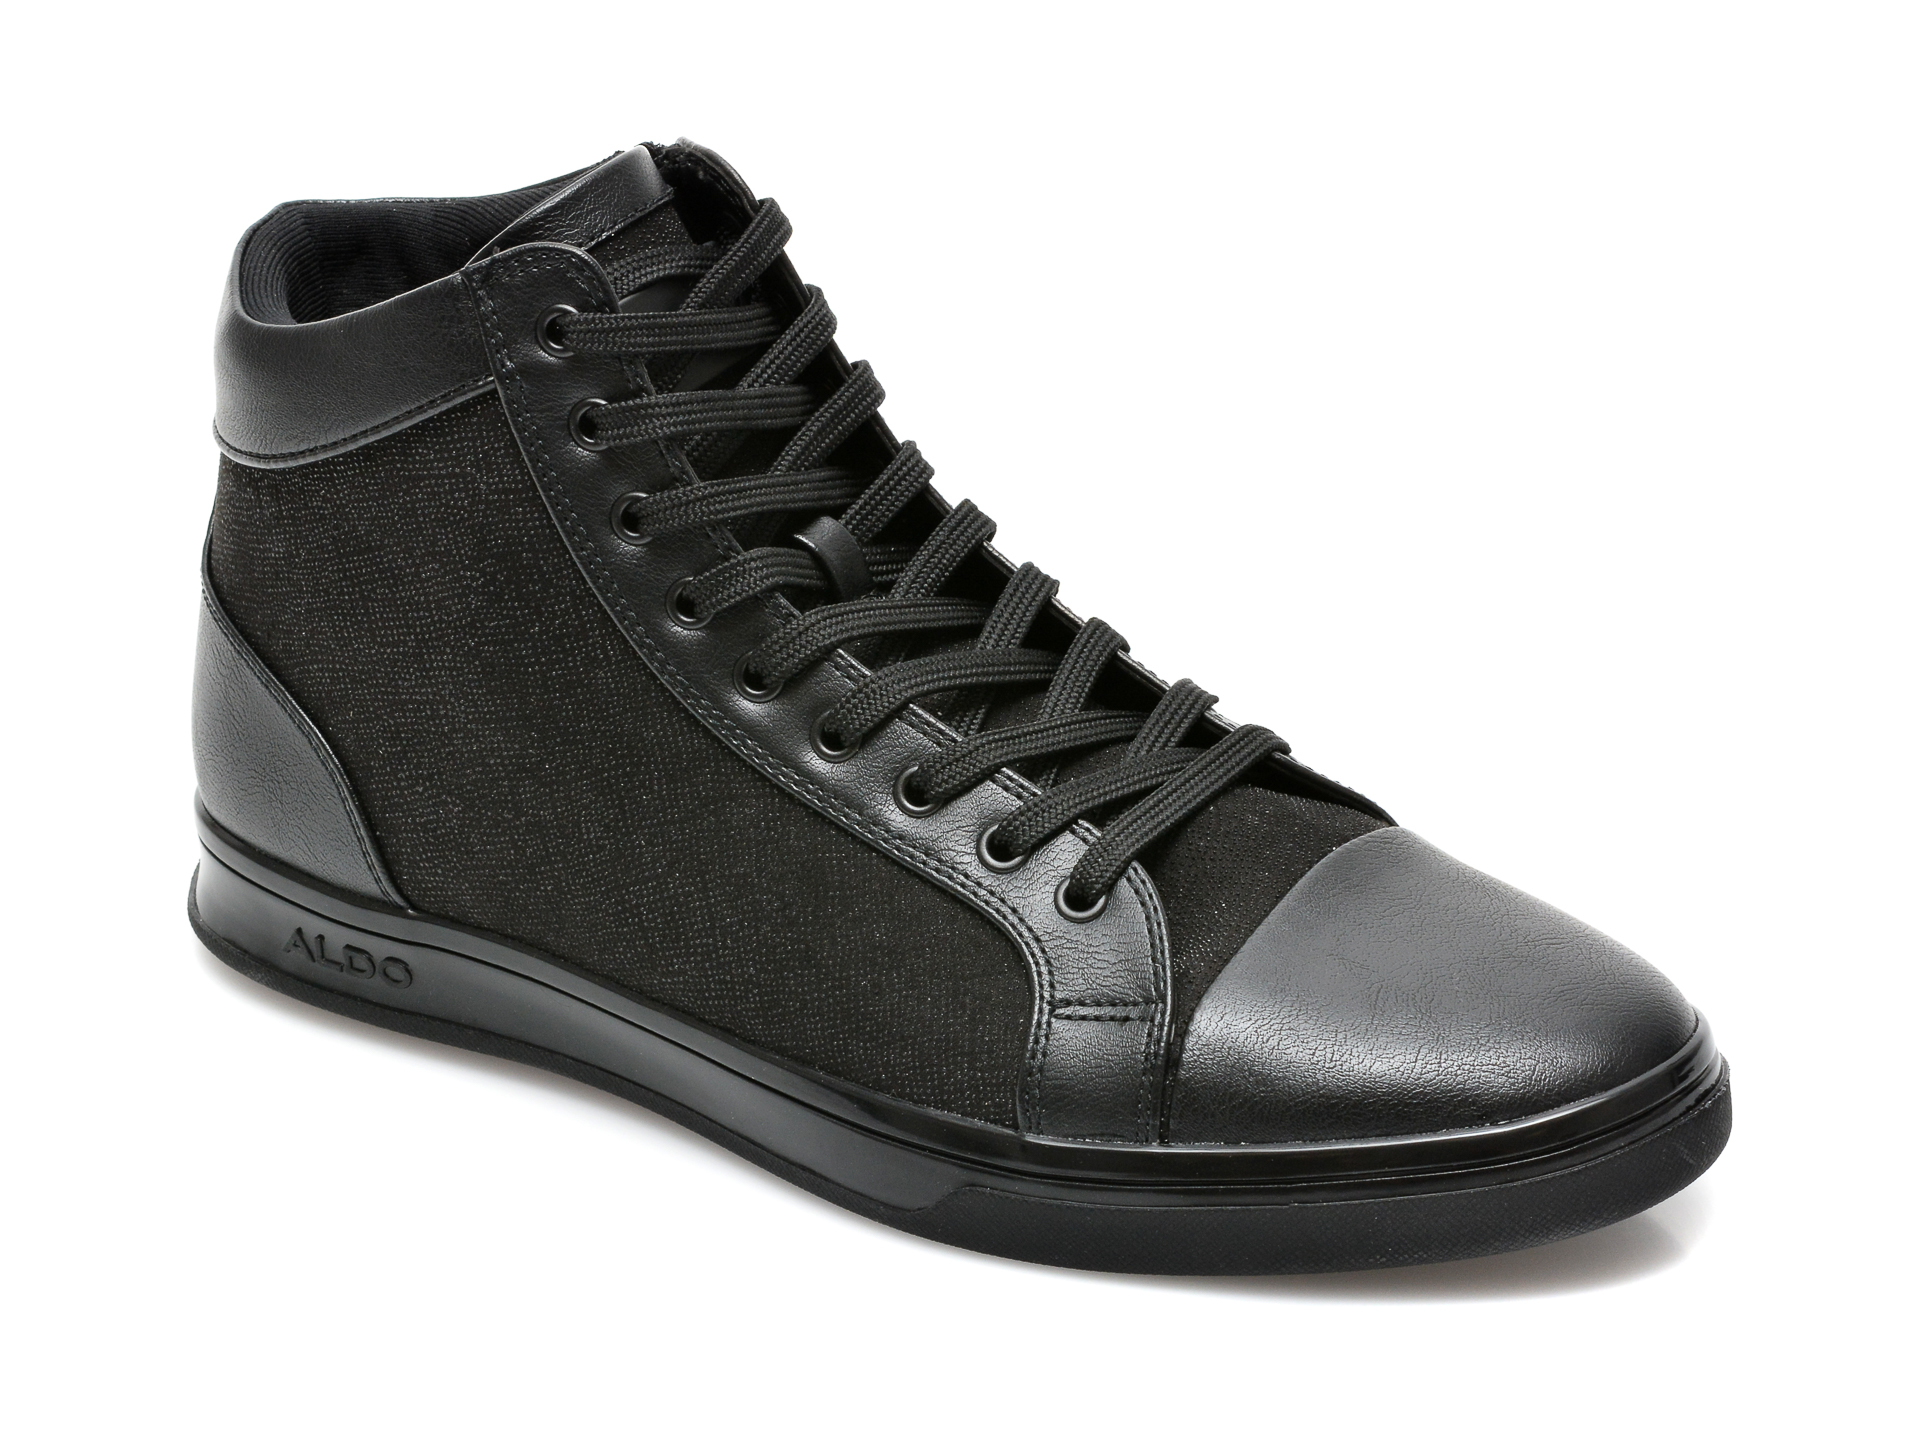 Pantofi ALDO negri, Senaniel001, din material textil si piele ecologica Aldo